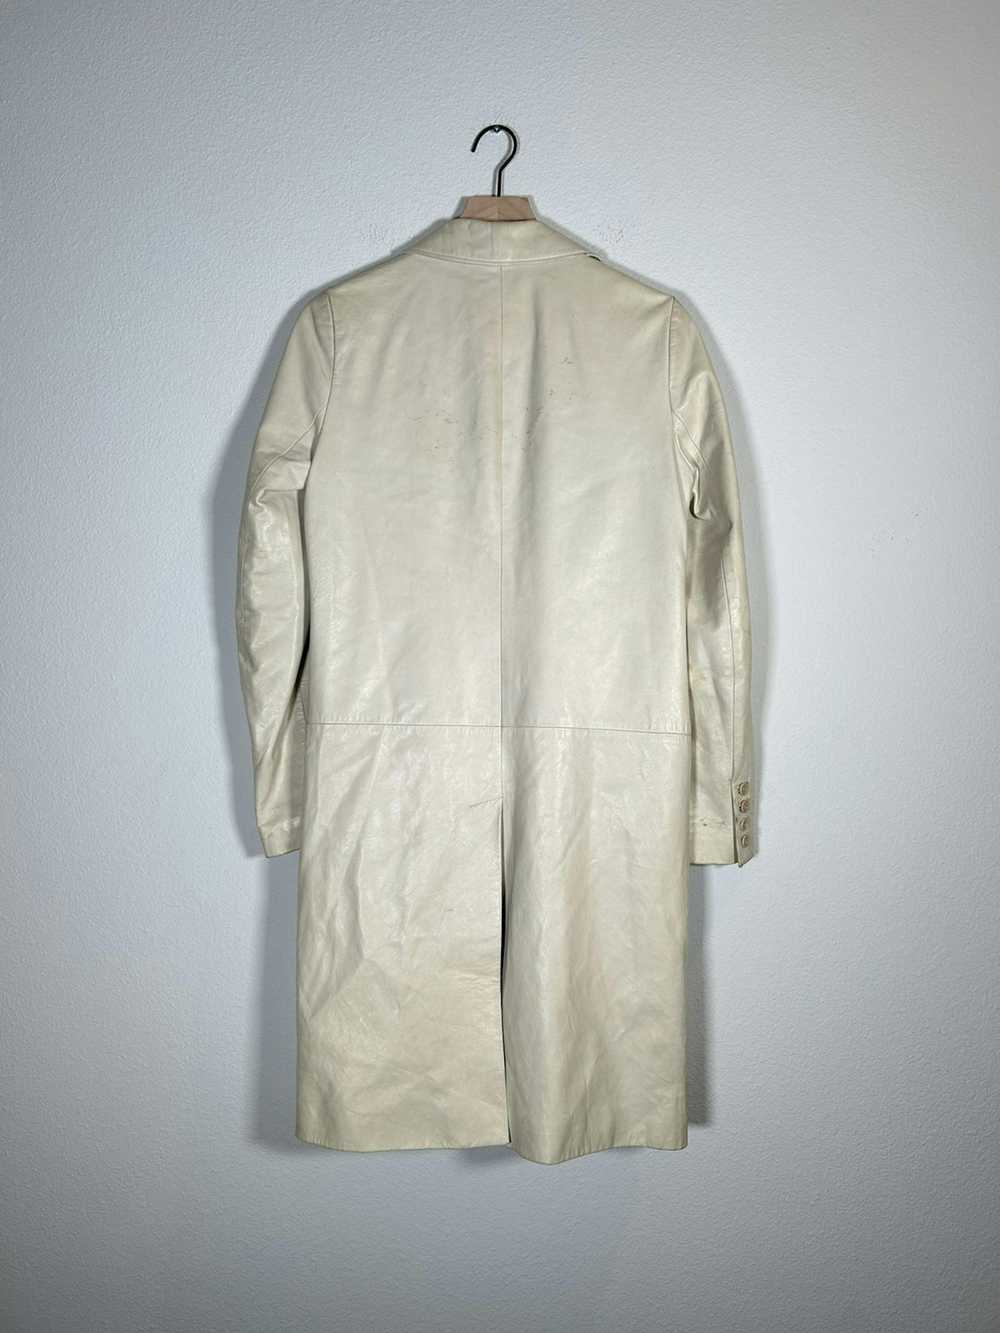 Helmut Lang 00’s Buffalo Leather Archive Jacket - image 2